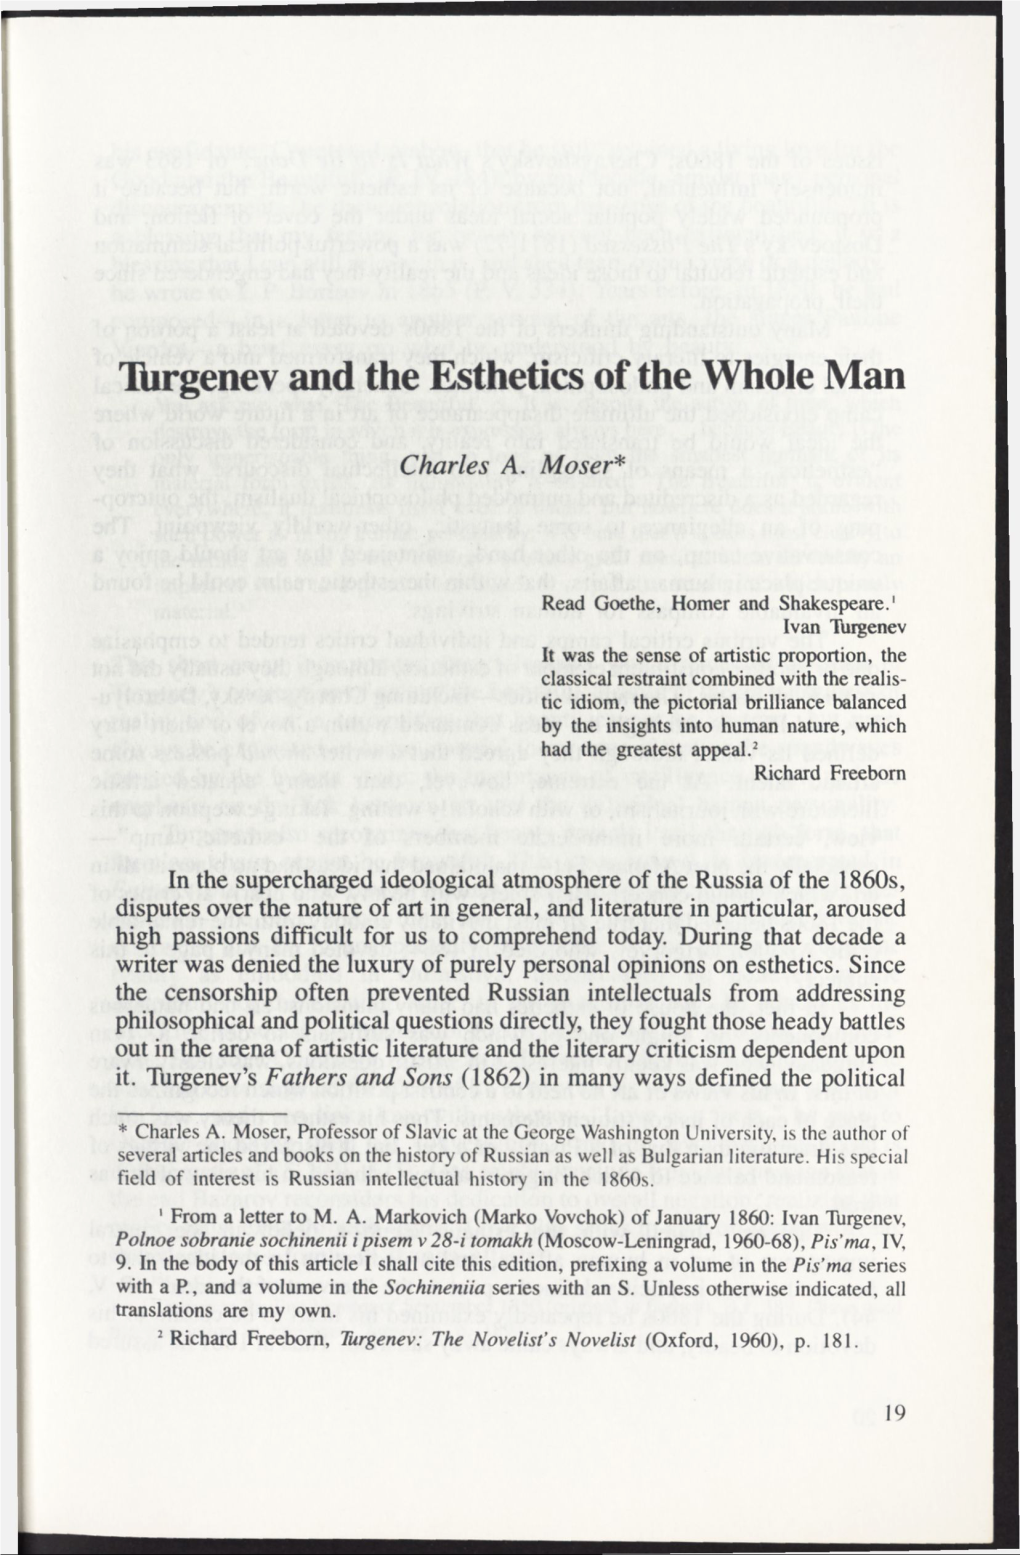 Turgenev and the Esthetics of the Whole Man